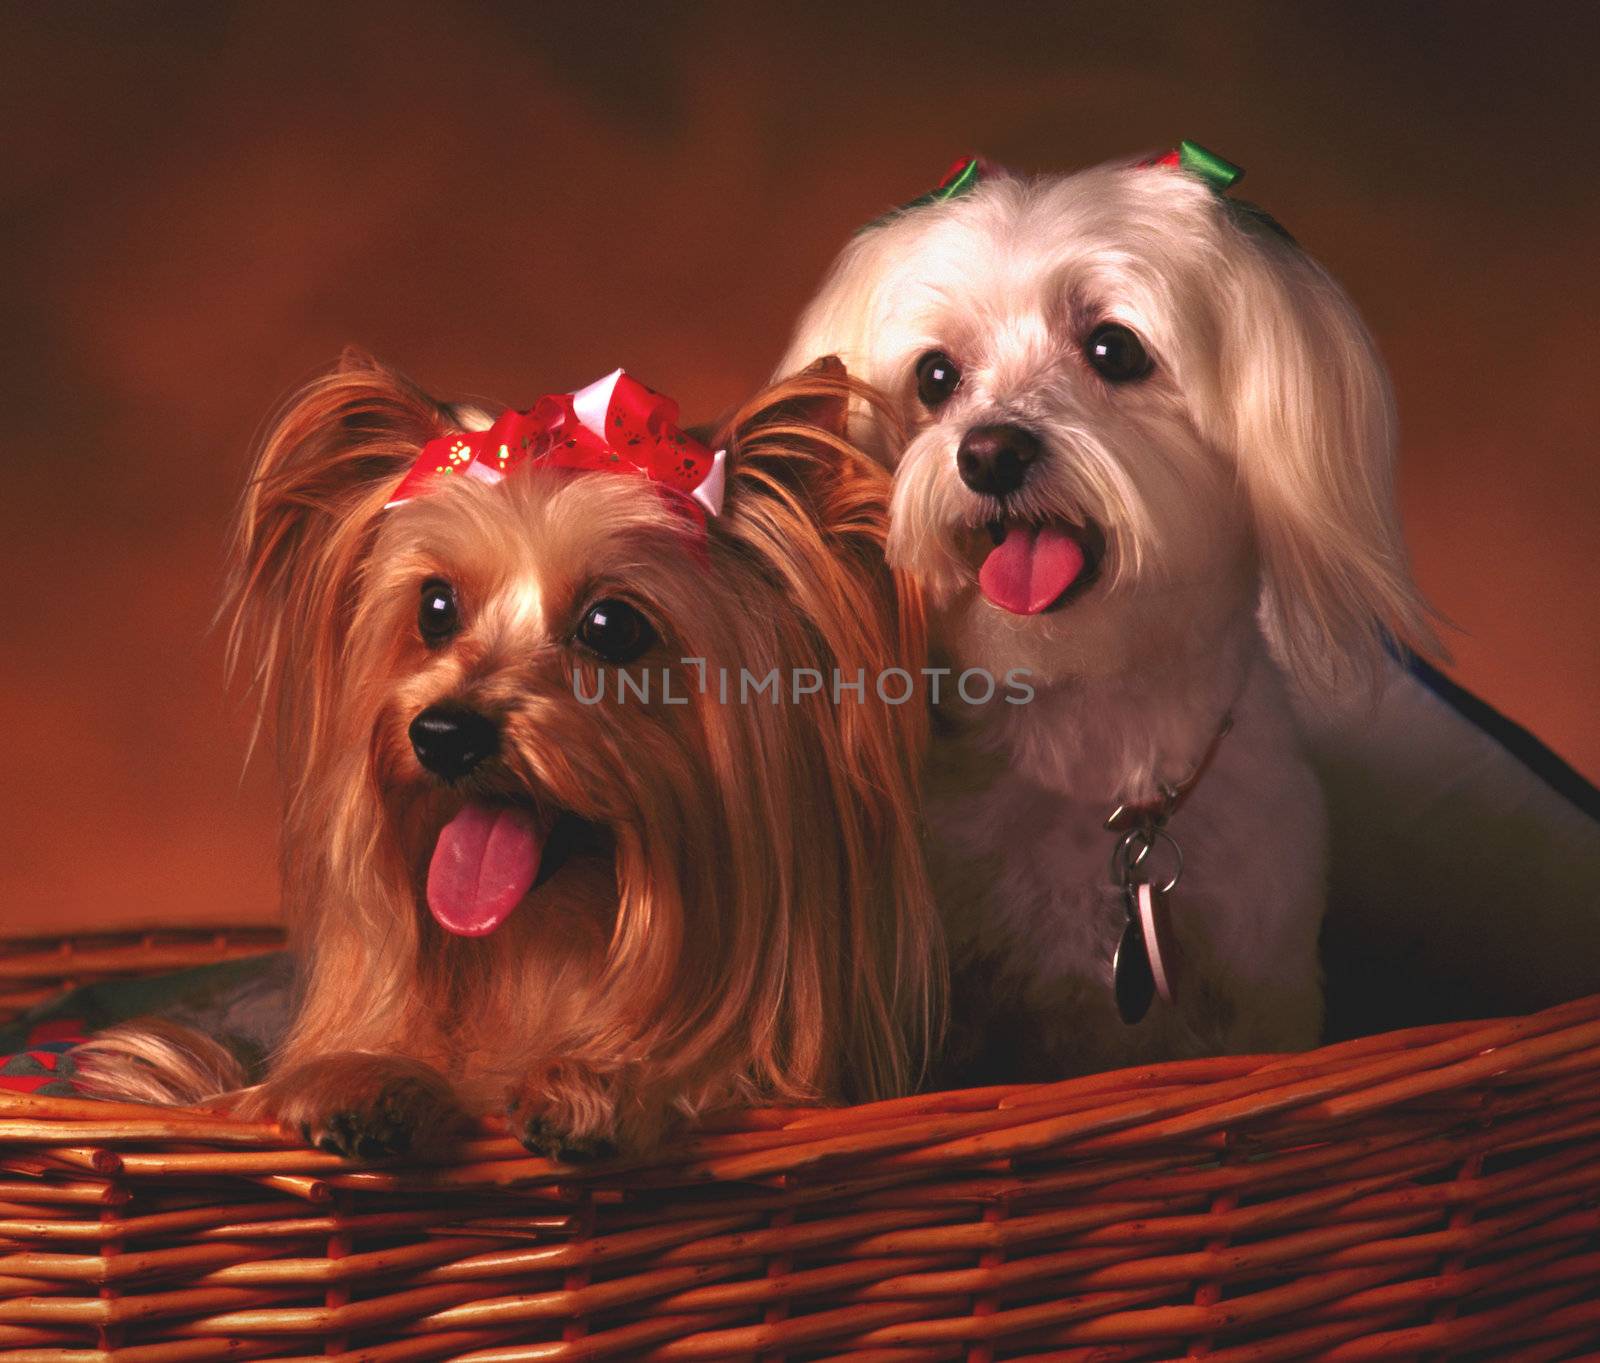 portrait of two dogs in basket